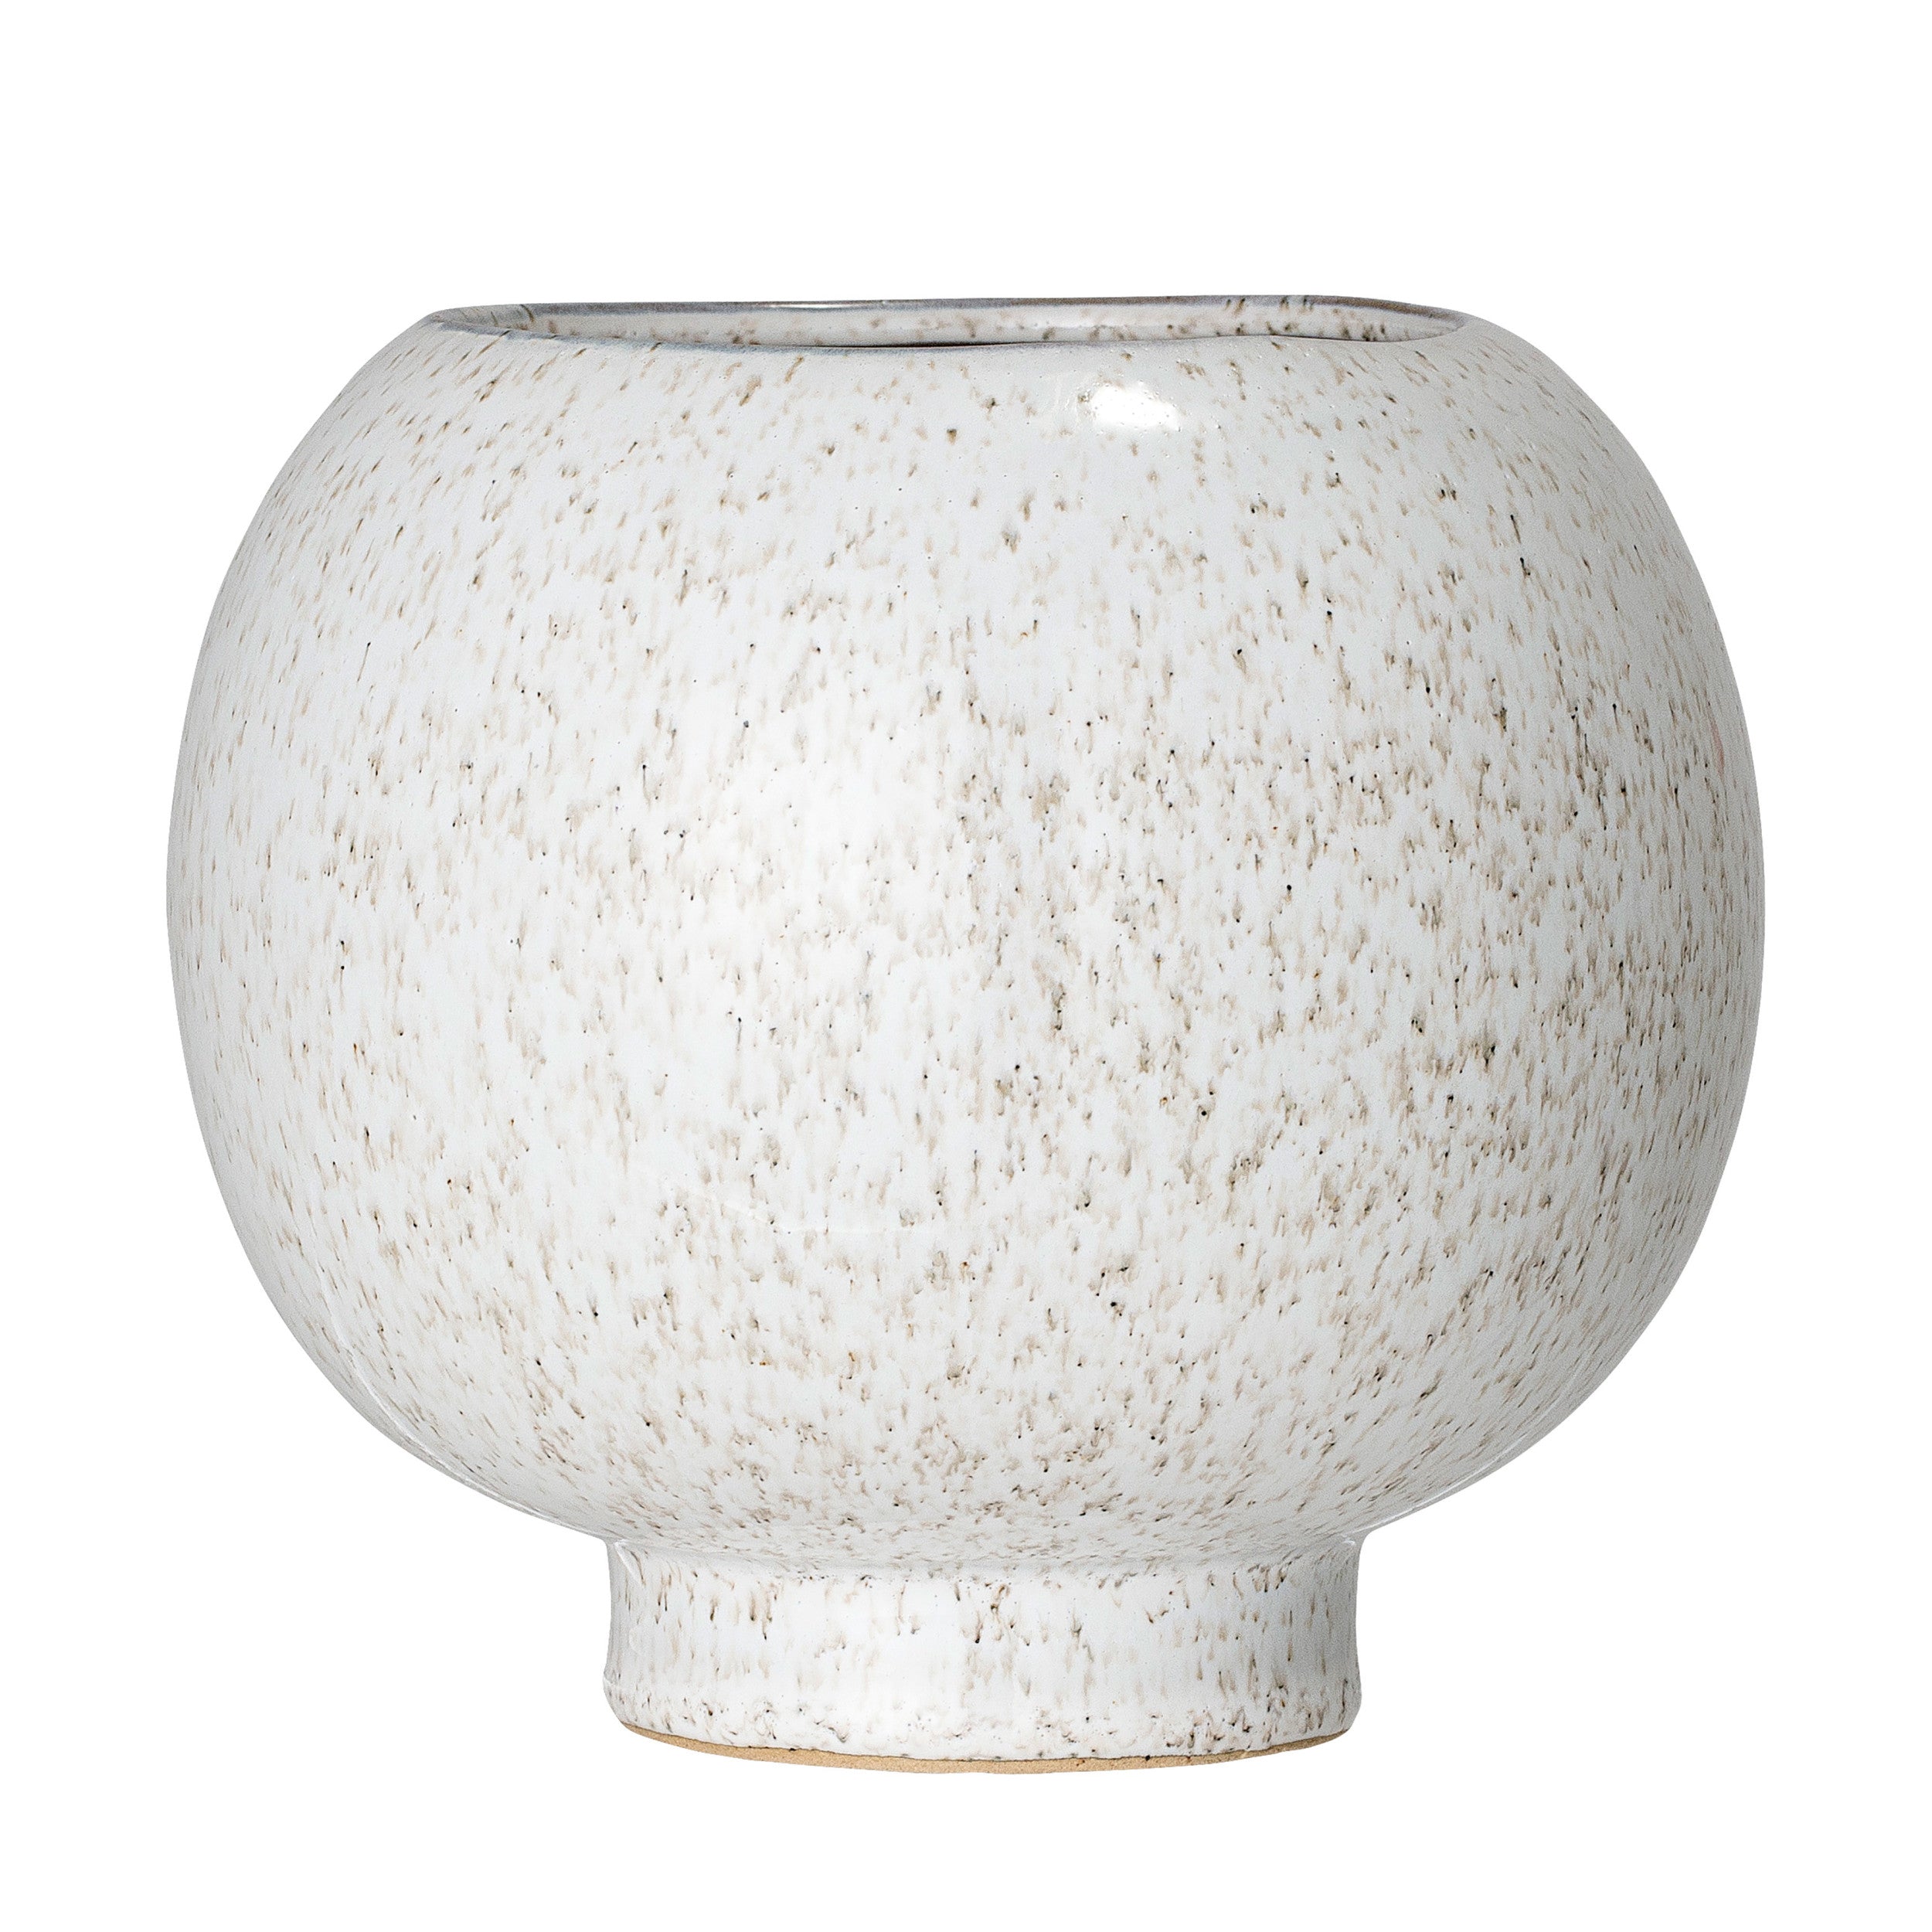 Speckled Stoneware Pot